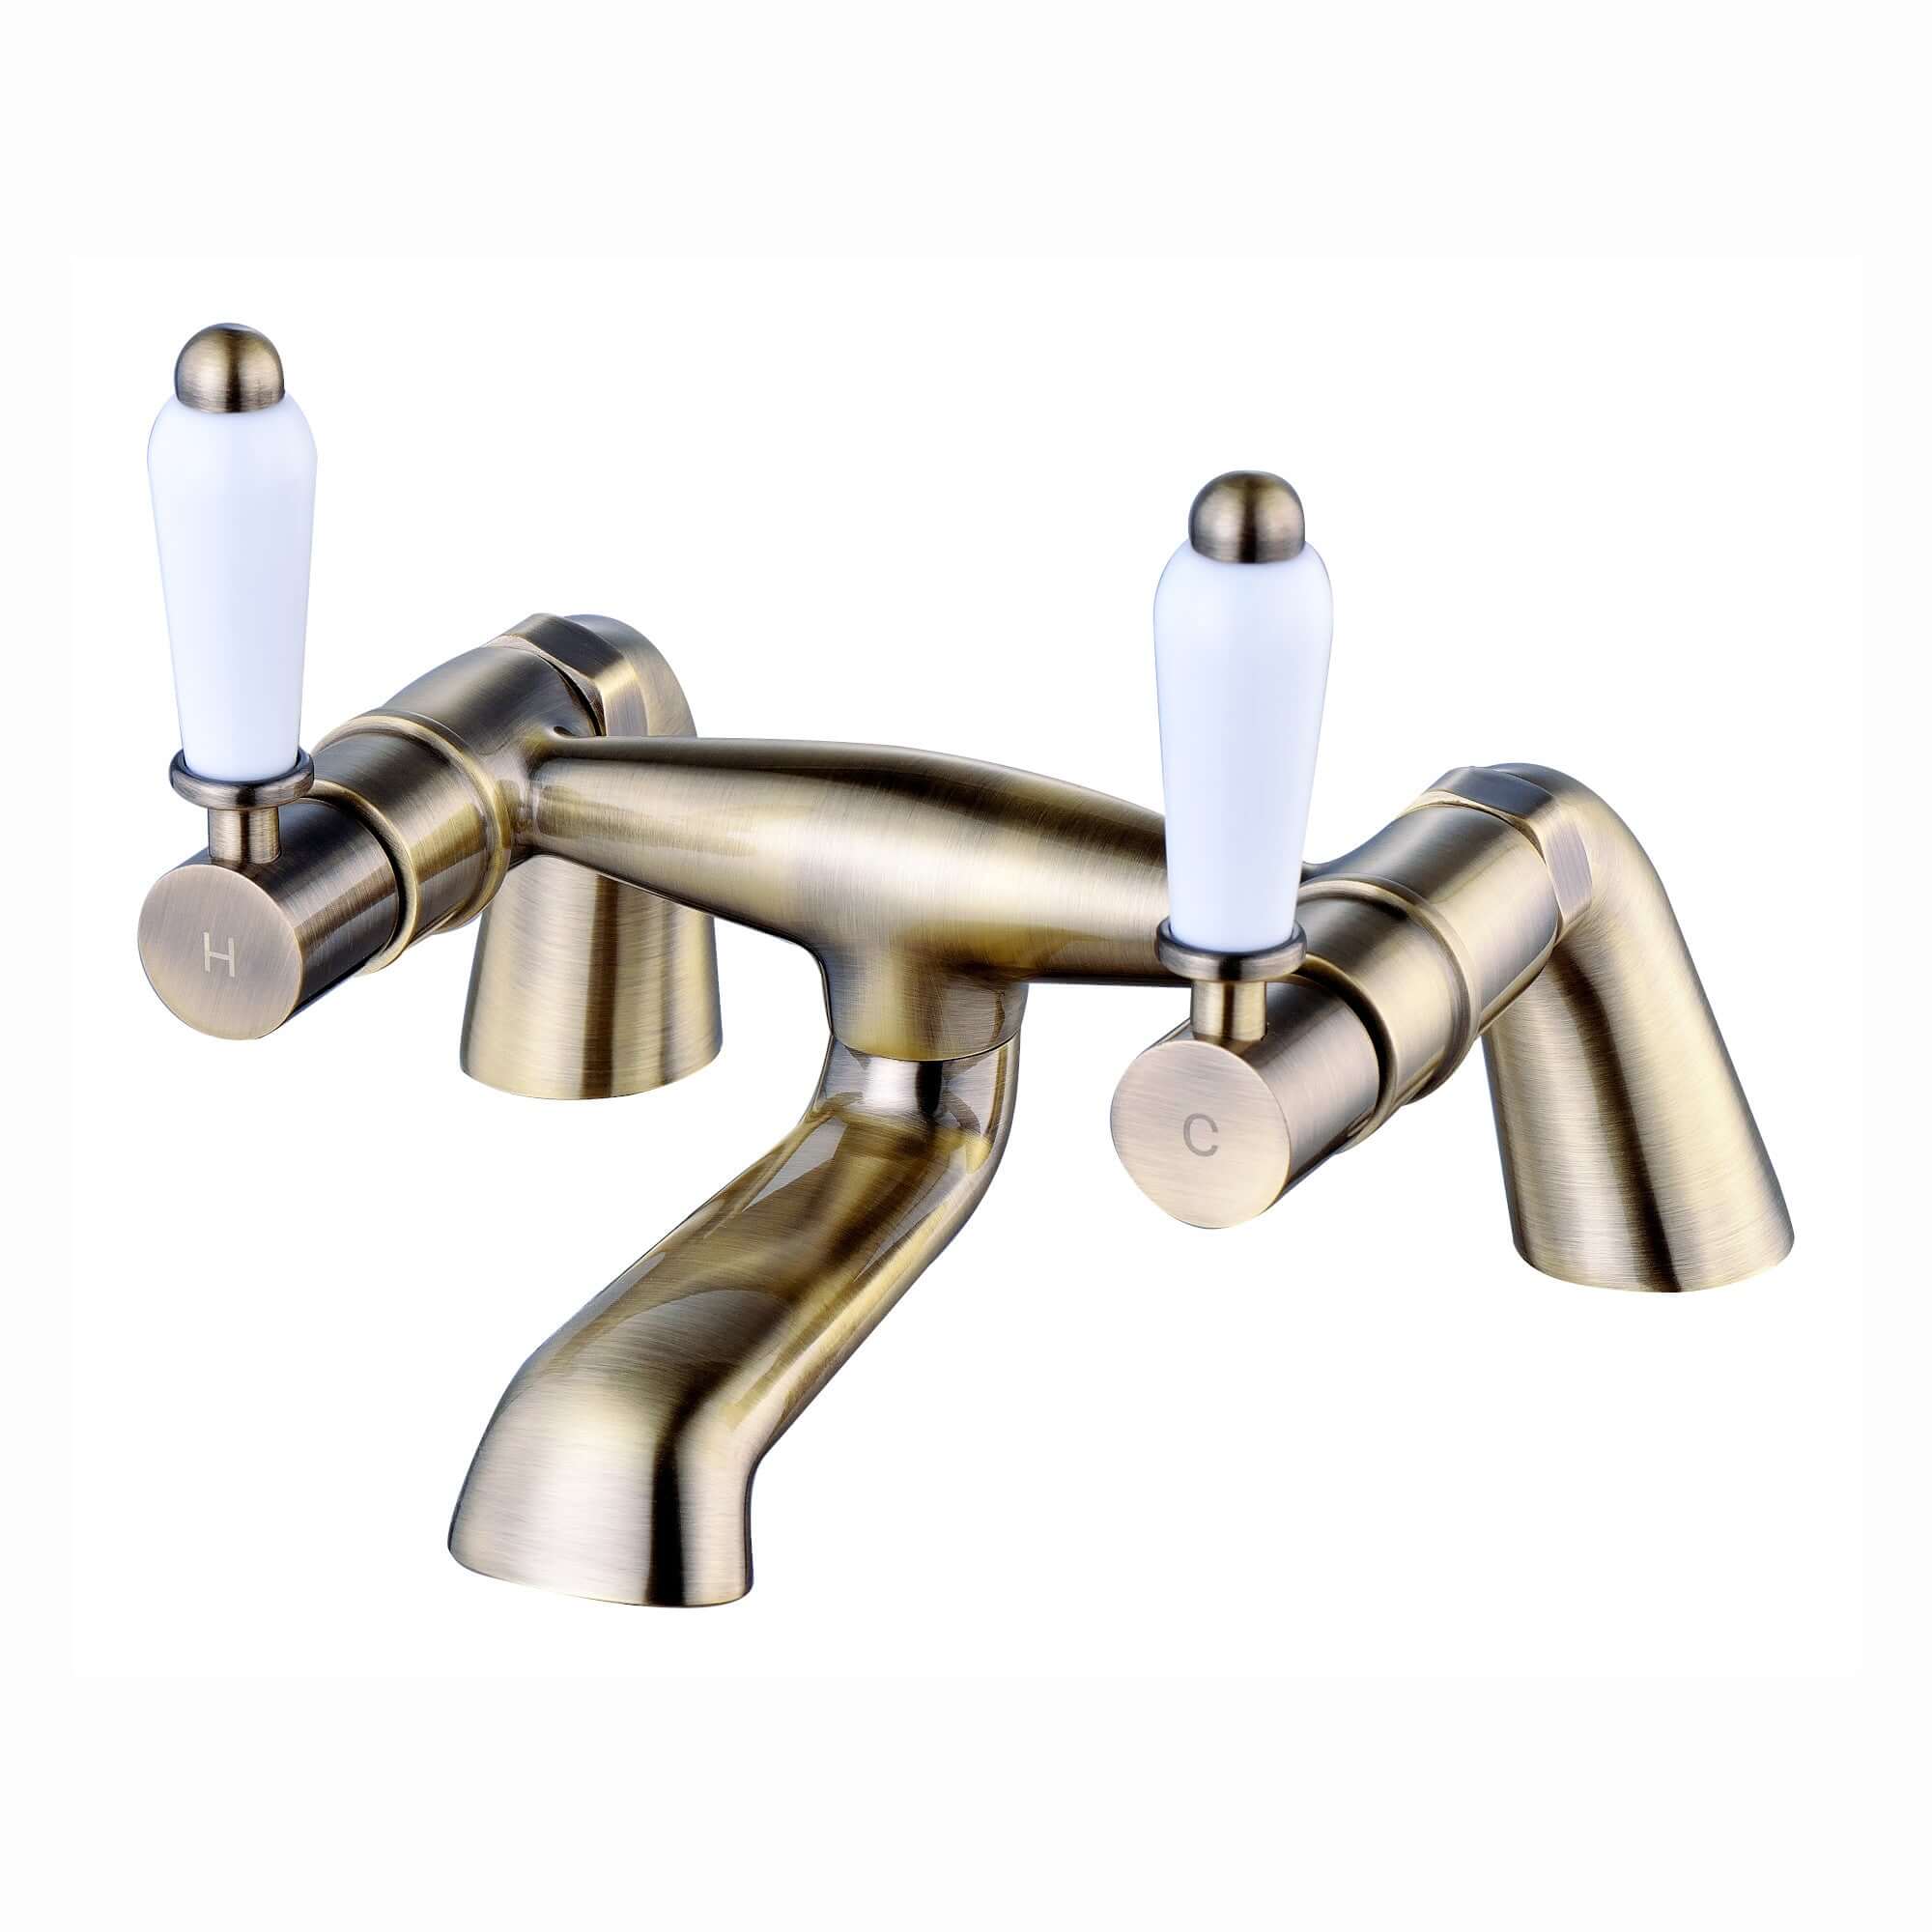 Downton bath mixer tap with white ceramic levers - antique bronze - Taps